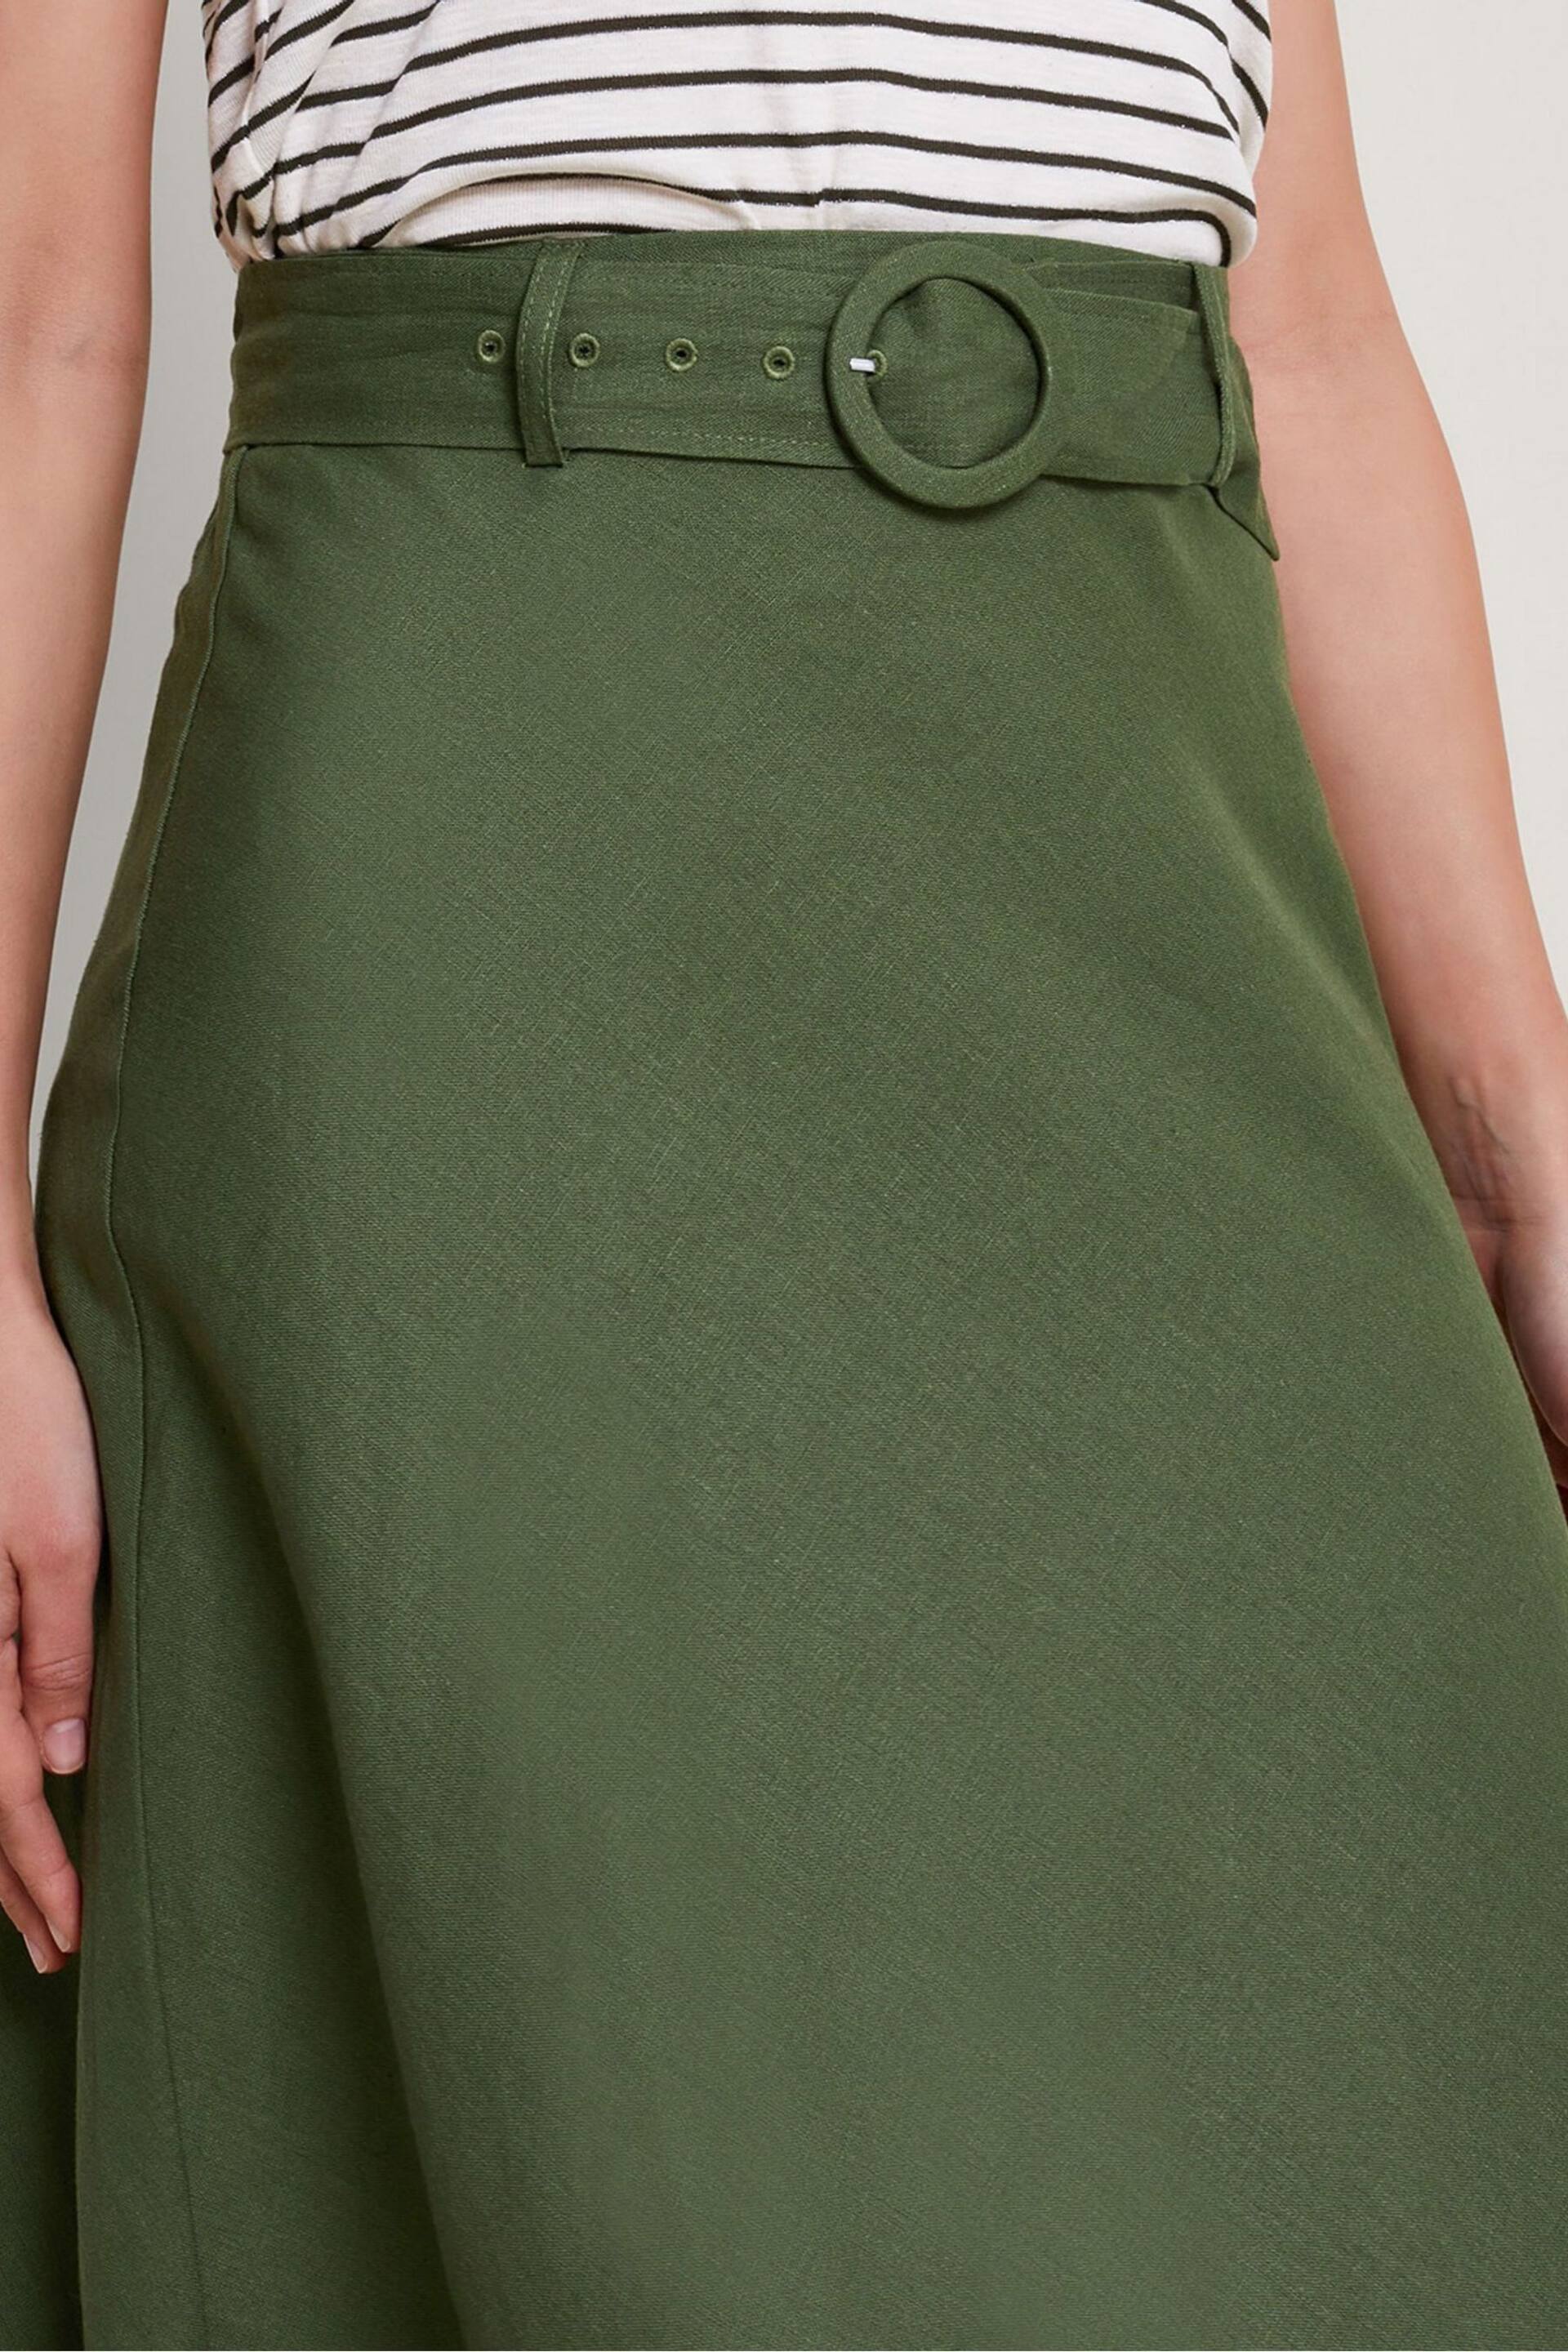 Monsoon Green Belted Midi Skirt - Image 4 of 5